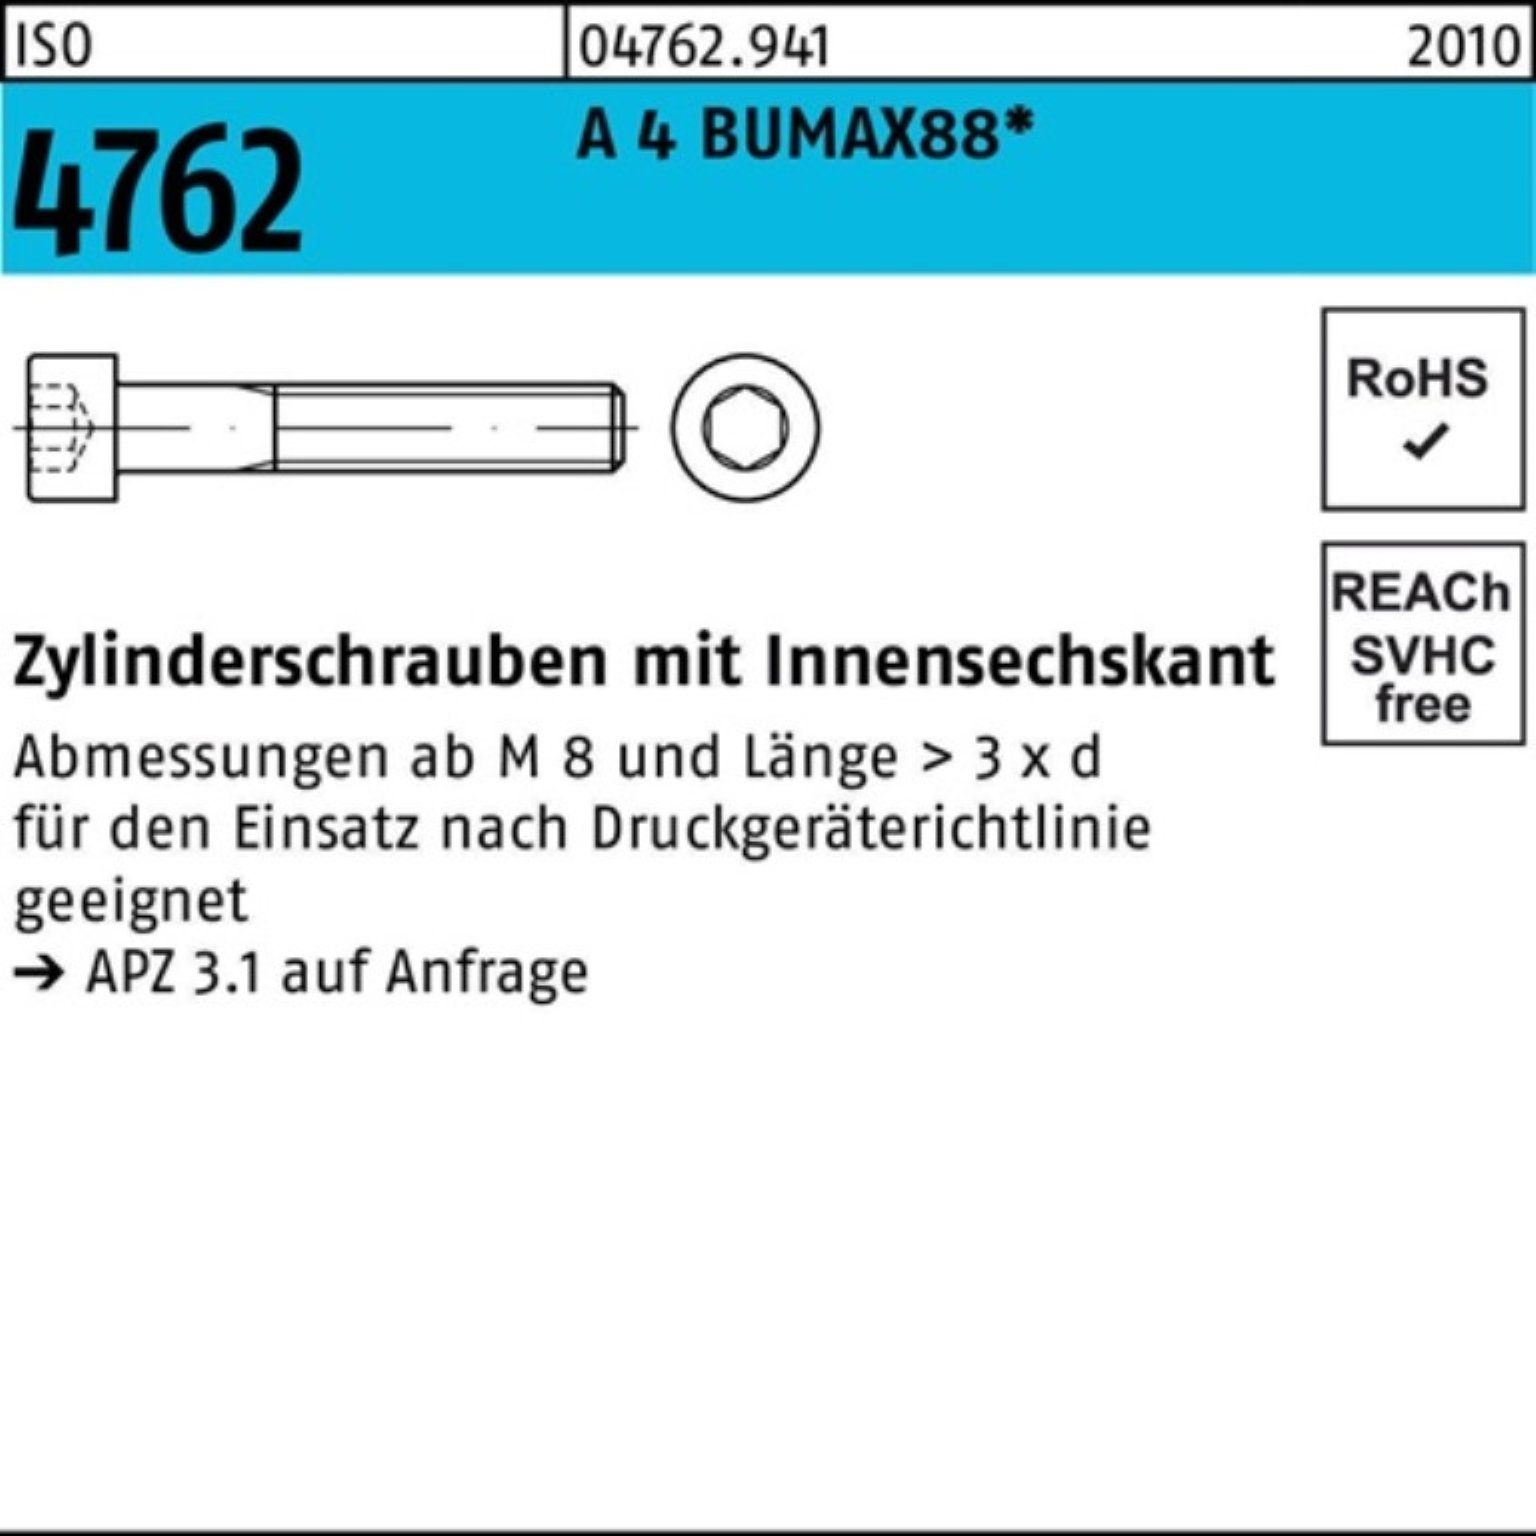 Bufab Zylinderschraube 100er Pack Zylinderschraube ISO 4762 Innen-6kt M5x 30 A 4 BUMAX88 100